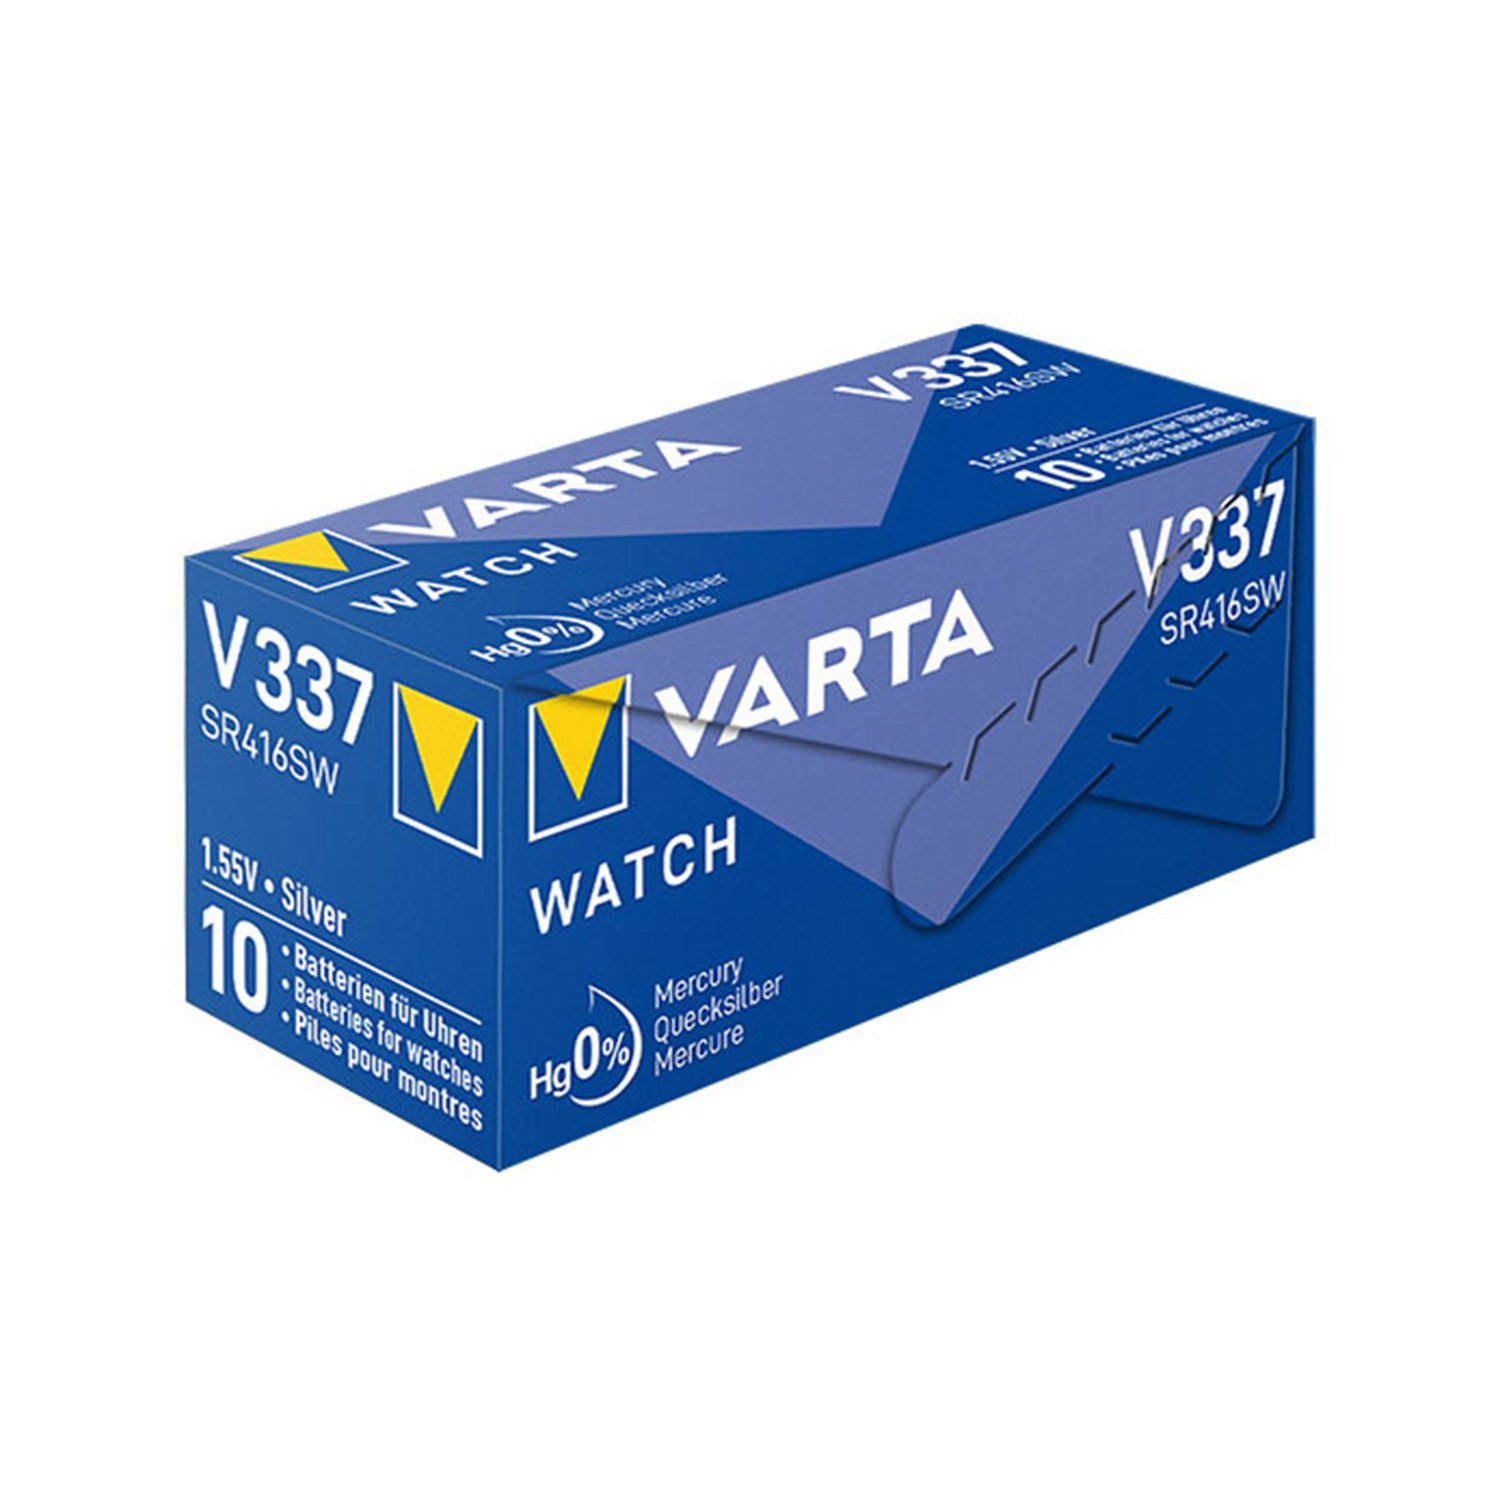 VARTA Varta 337 Knopfzelle Batterie